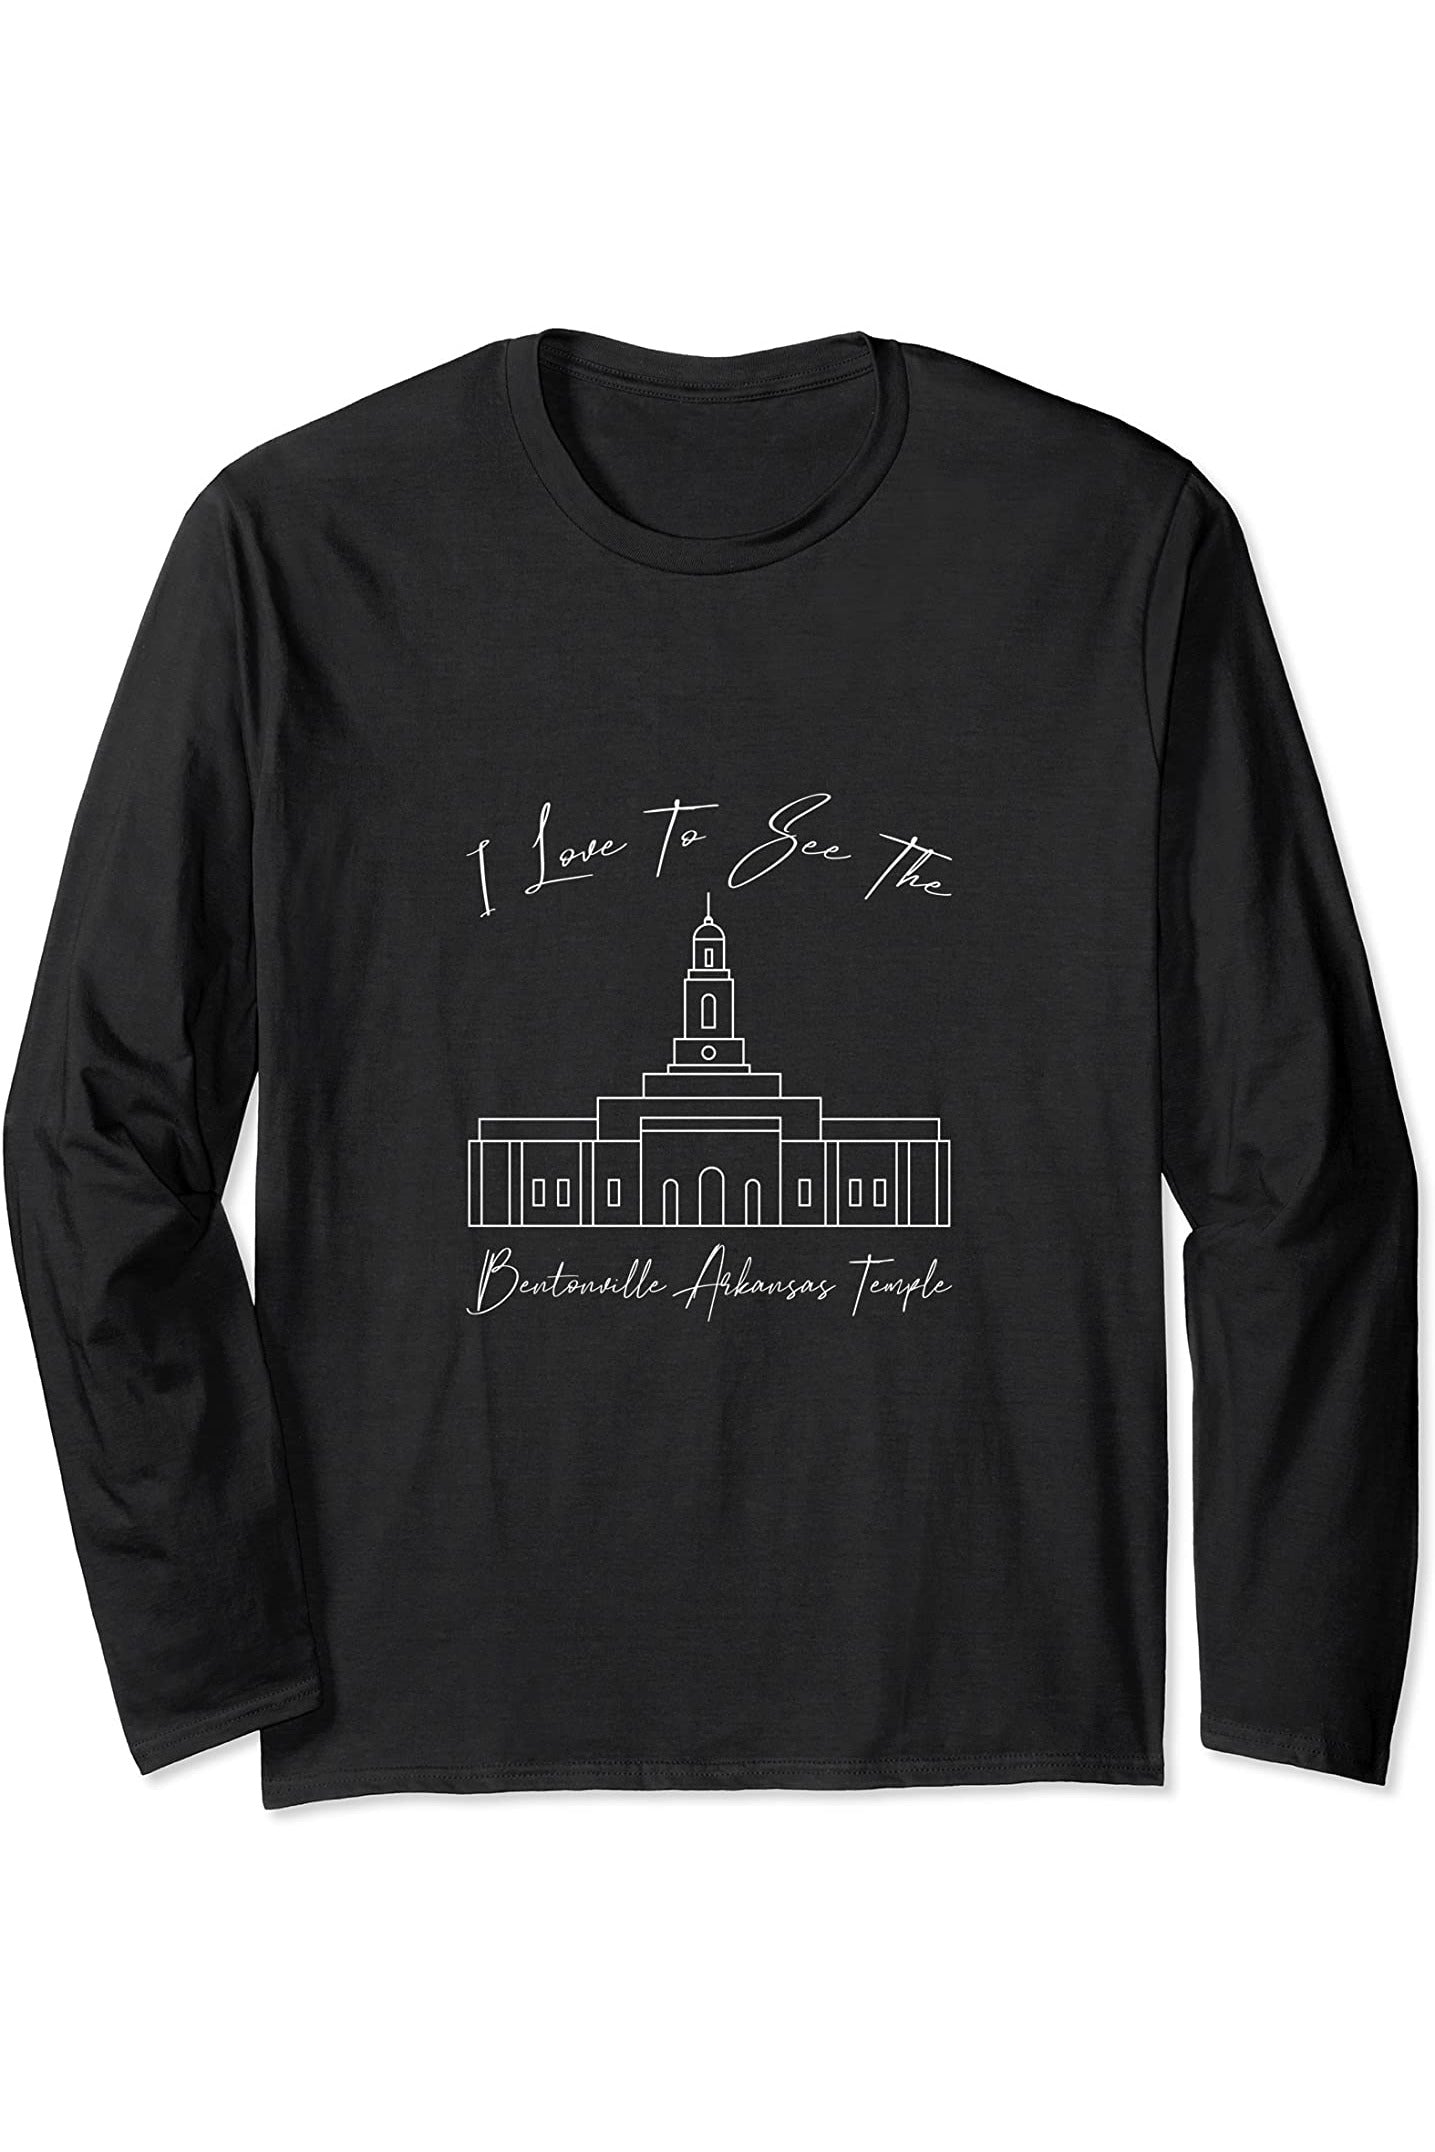 Bentonville Arkansas Temple Long Sleeve T-Shirt - Calligraphy Style (English) US